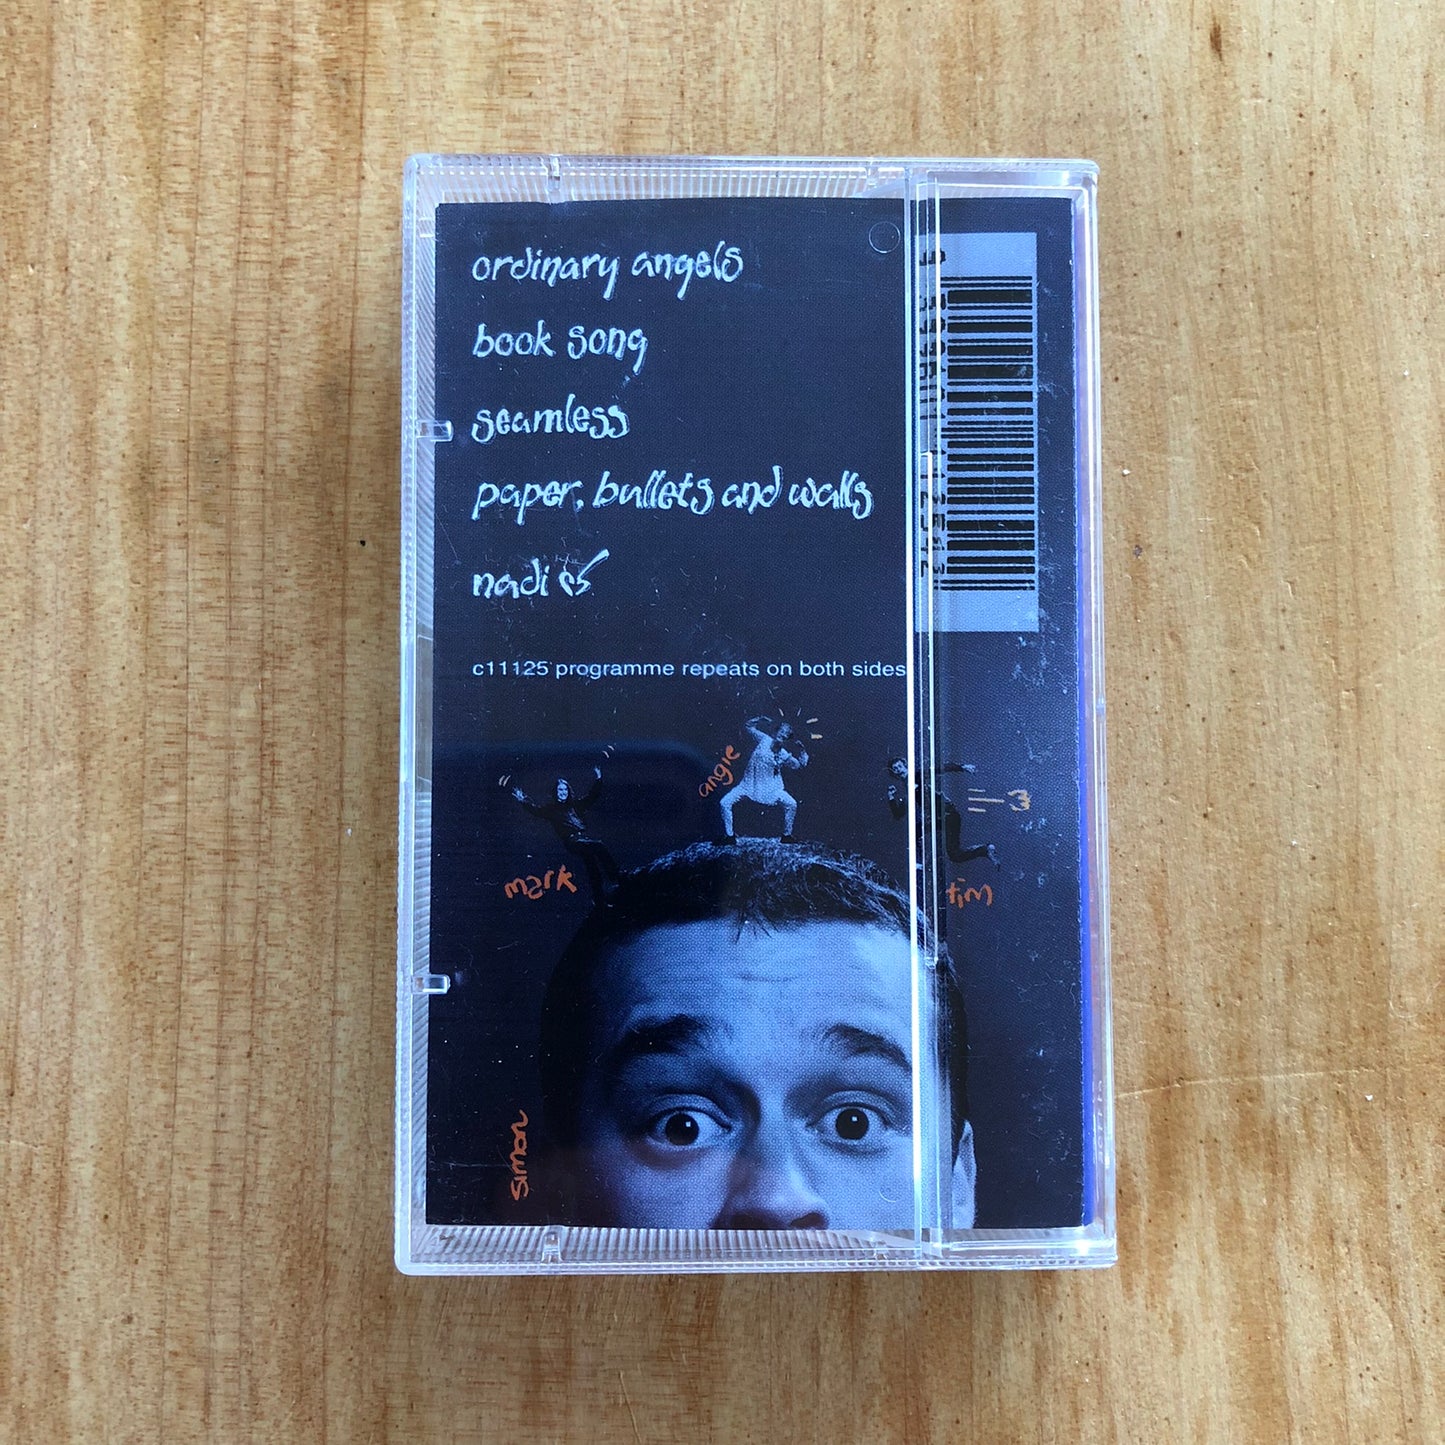 frente! - Clunk (cassette)